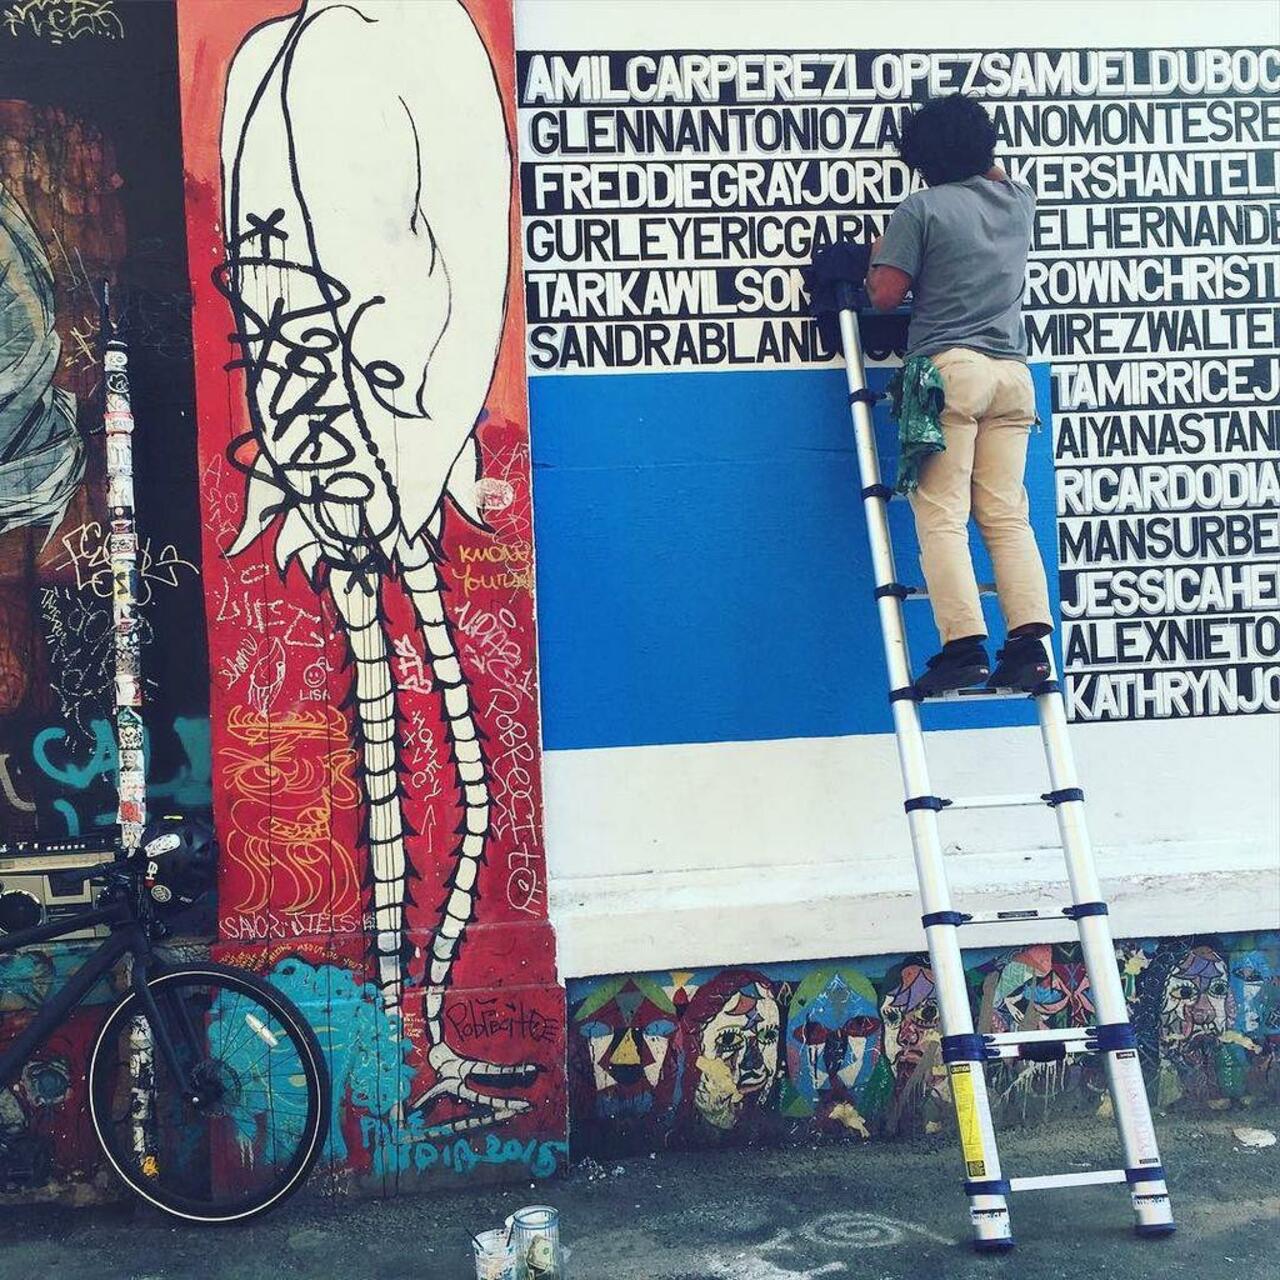 RT @artpushr: via #maidstonebuttermilk "http://bit.ly/1L9VZy6" #graffiti #streetart http://t.co/msPjB6xSxc